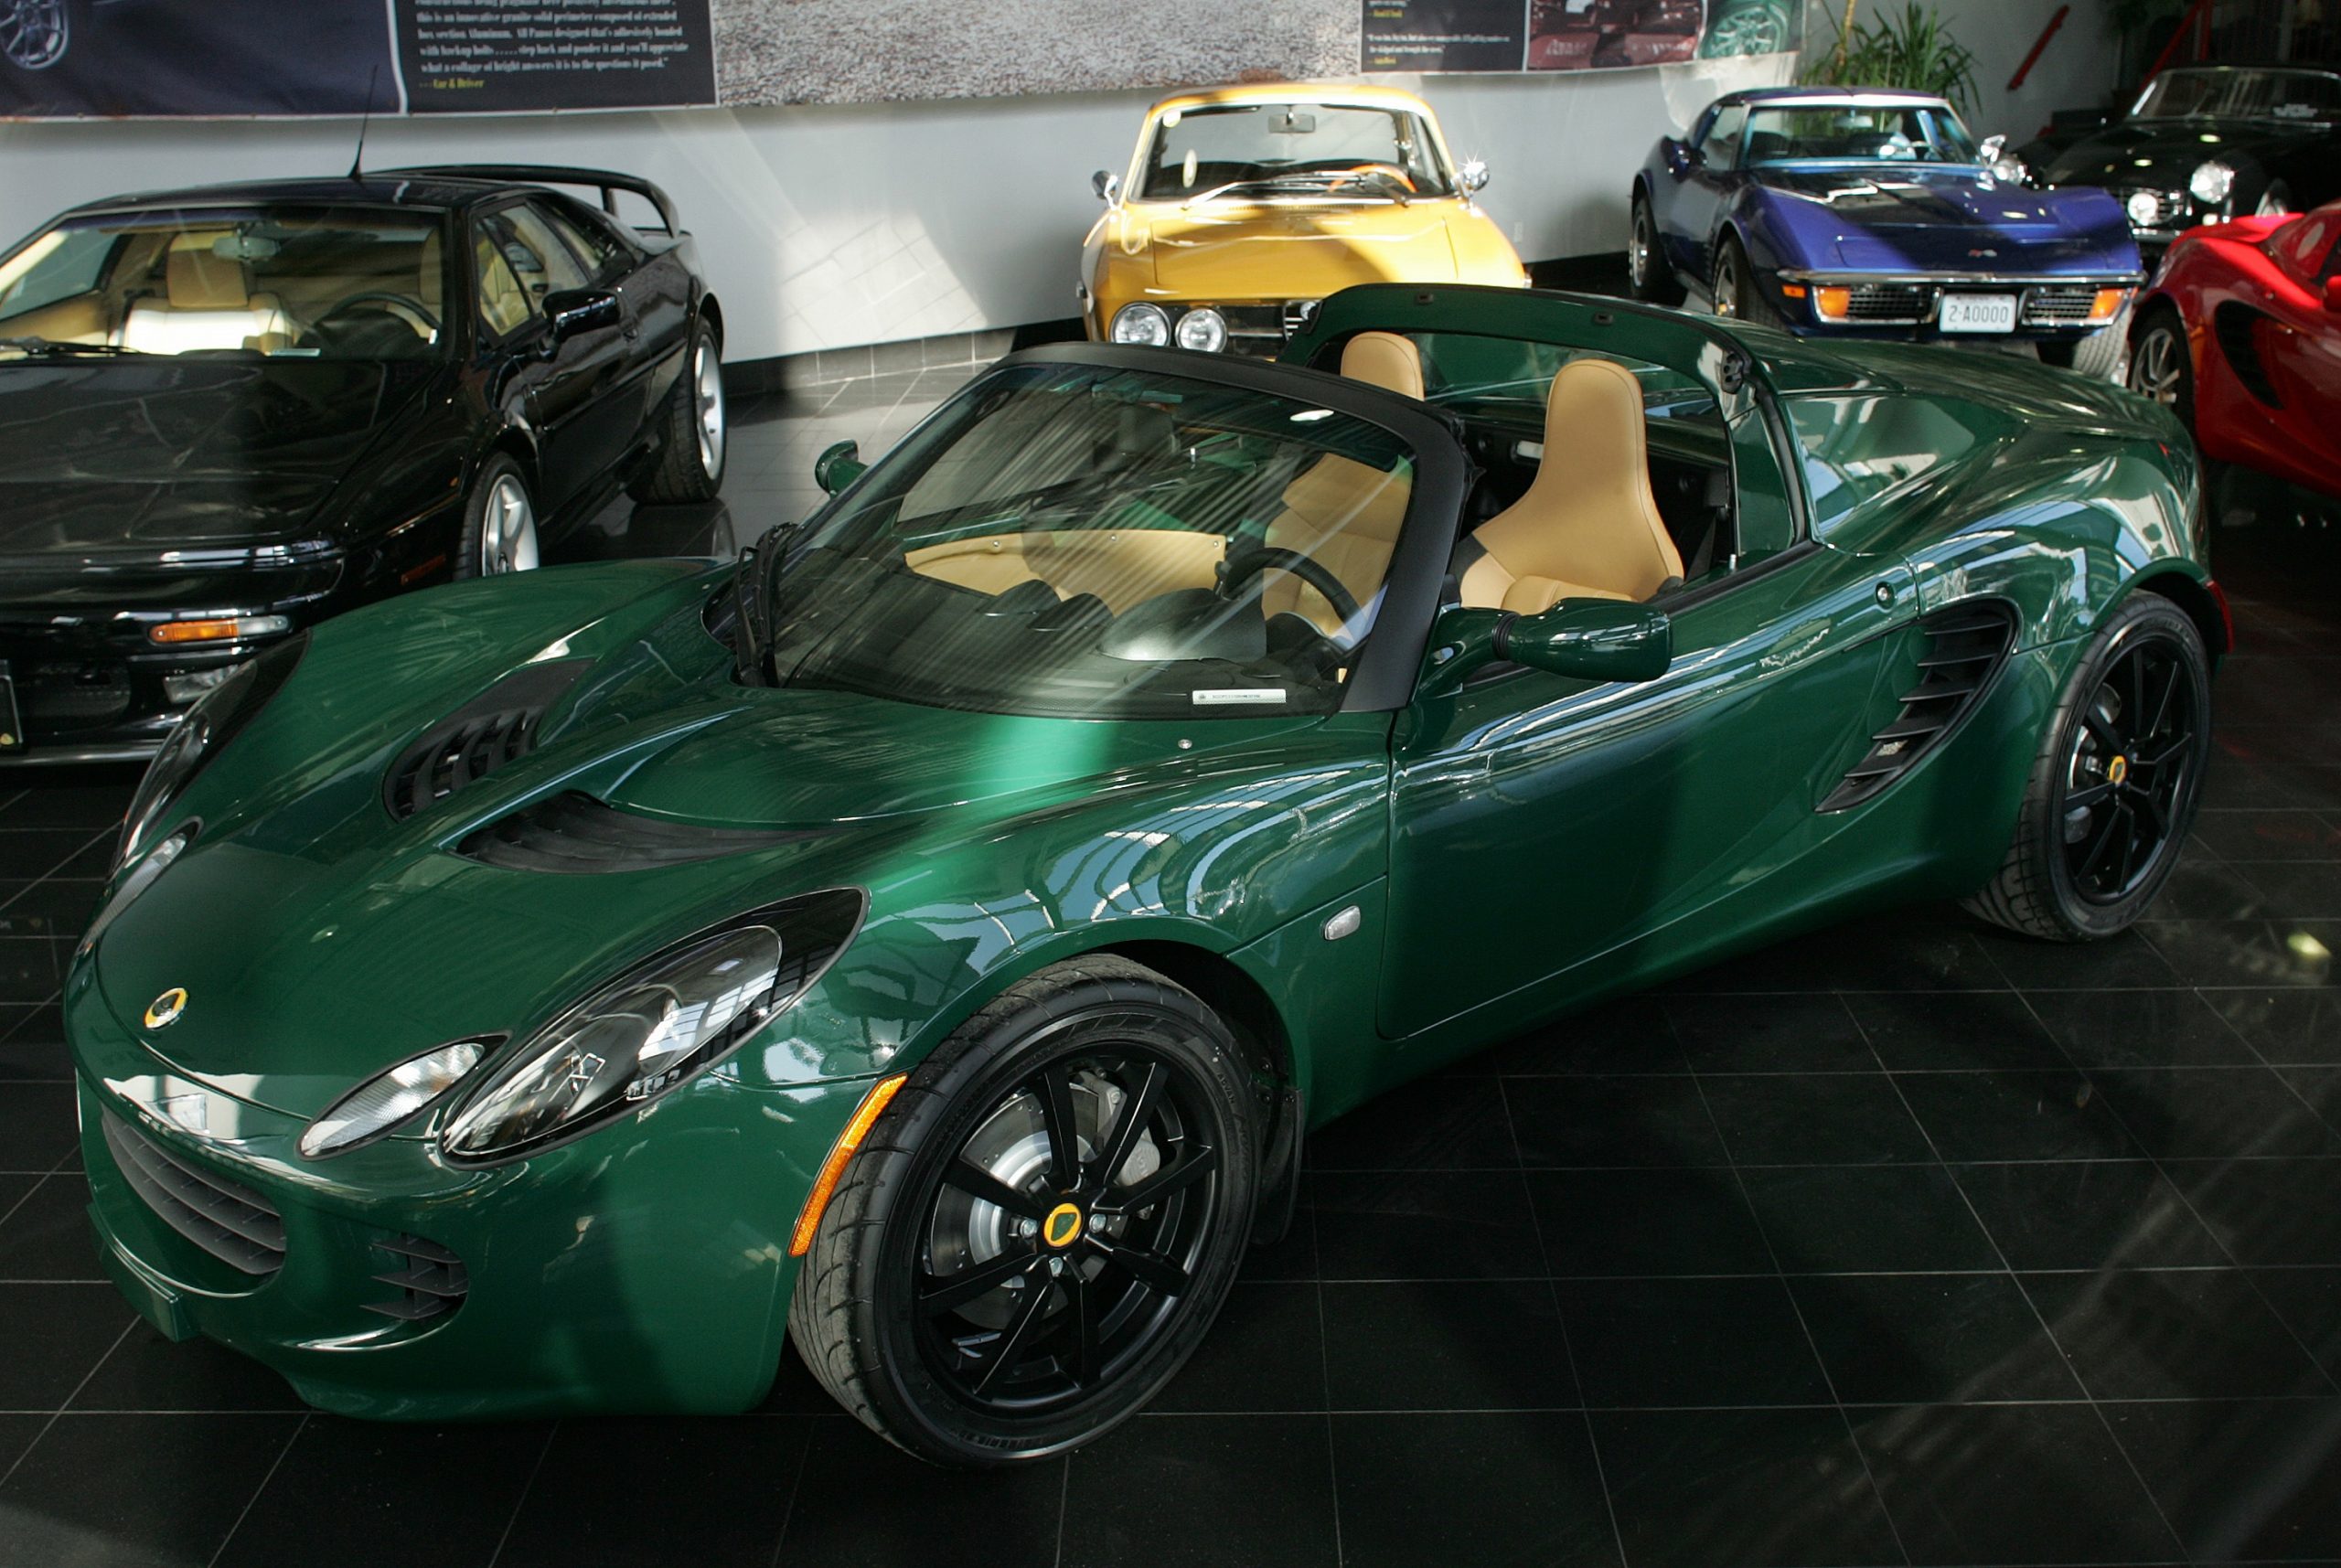 A green 2005 Lotus Elise in a car dealer